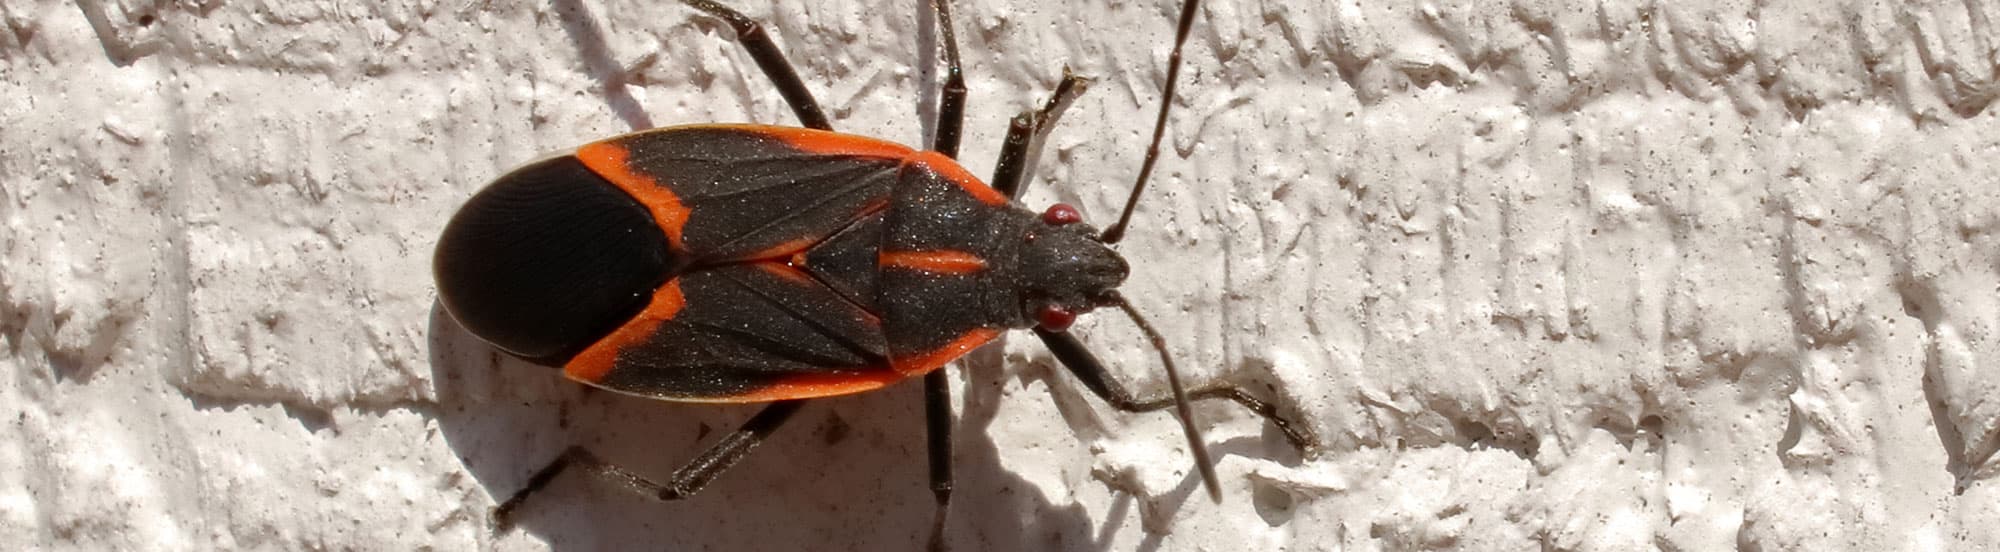 boxelder bug on exterior of house